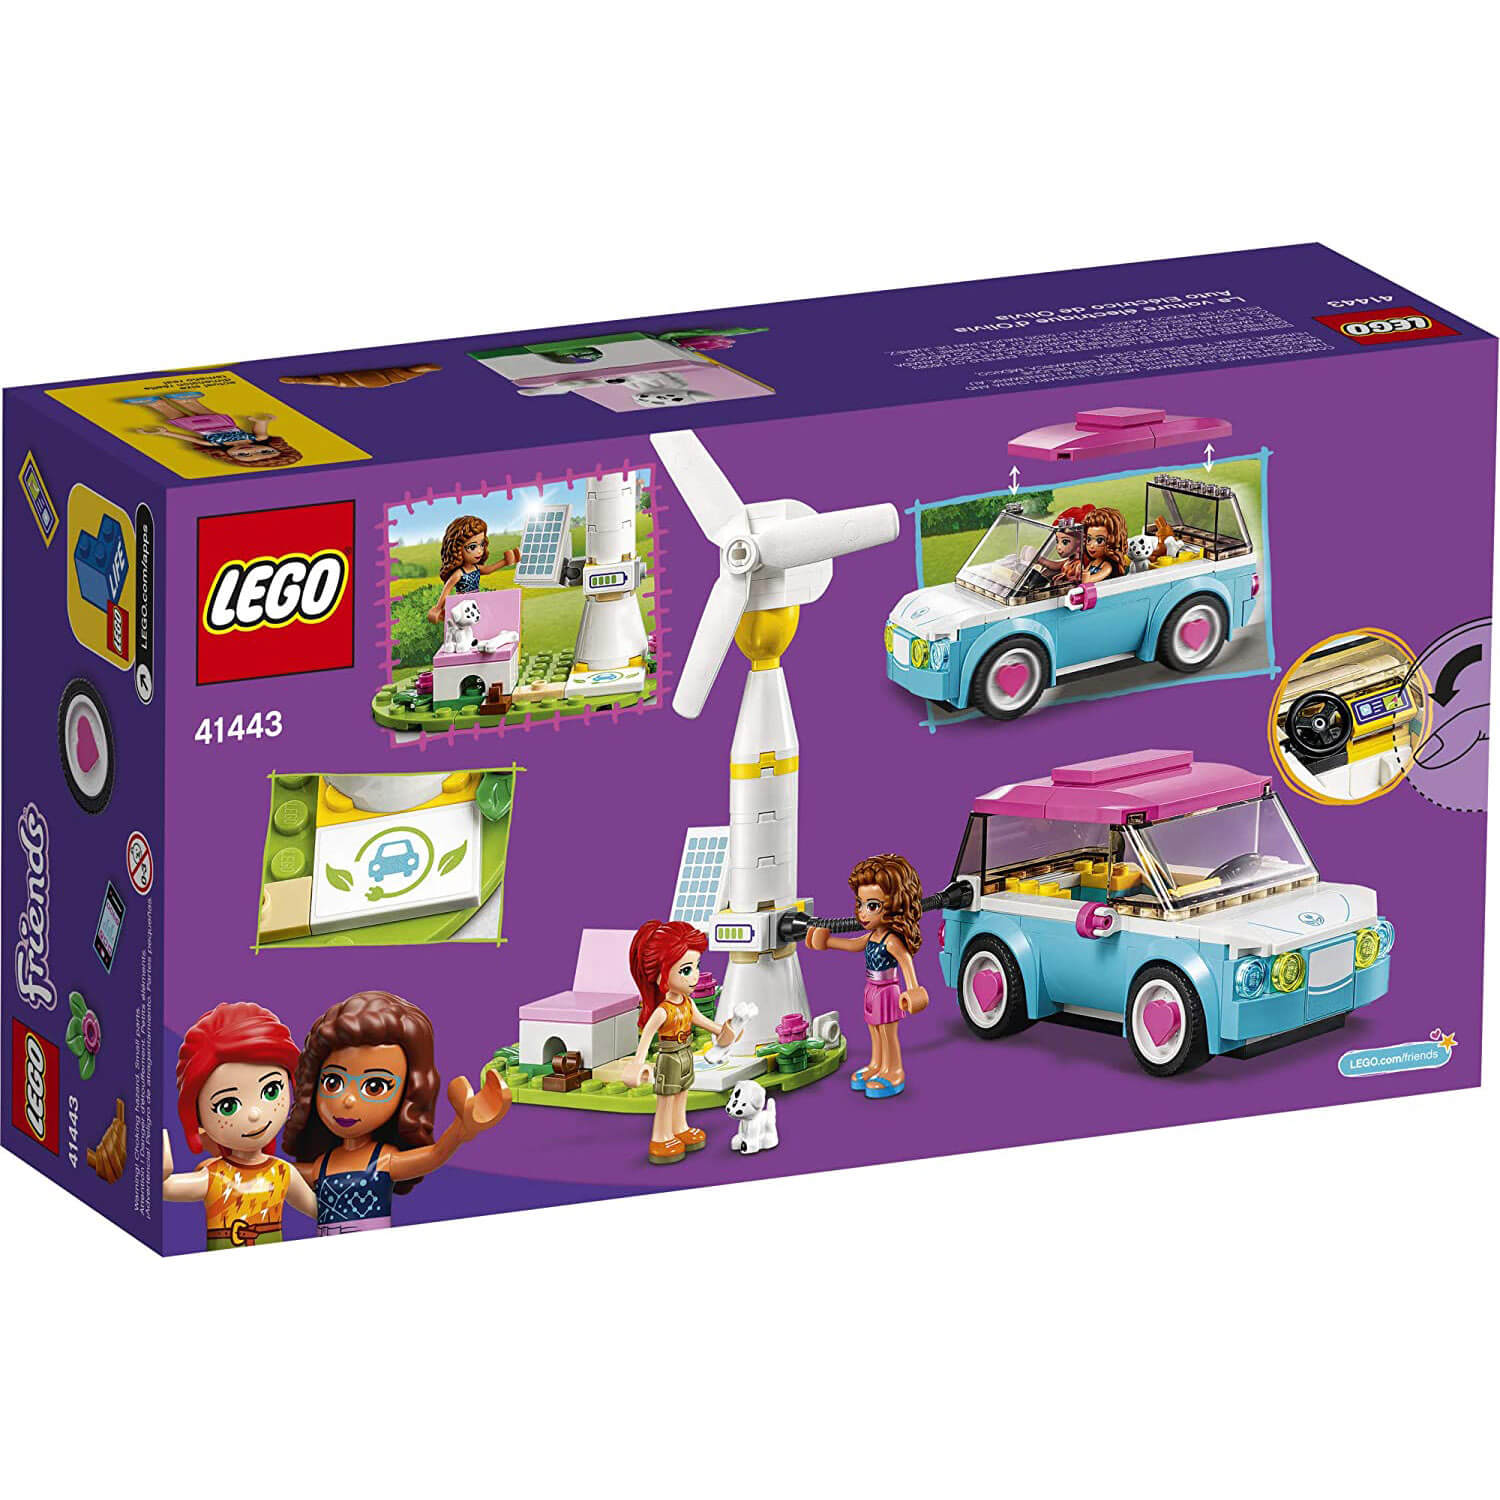 LEGO Friends Olivia's Electric Car 183 Piece Building Set (41443)